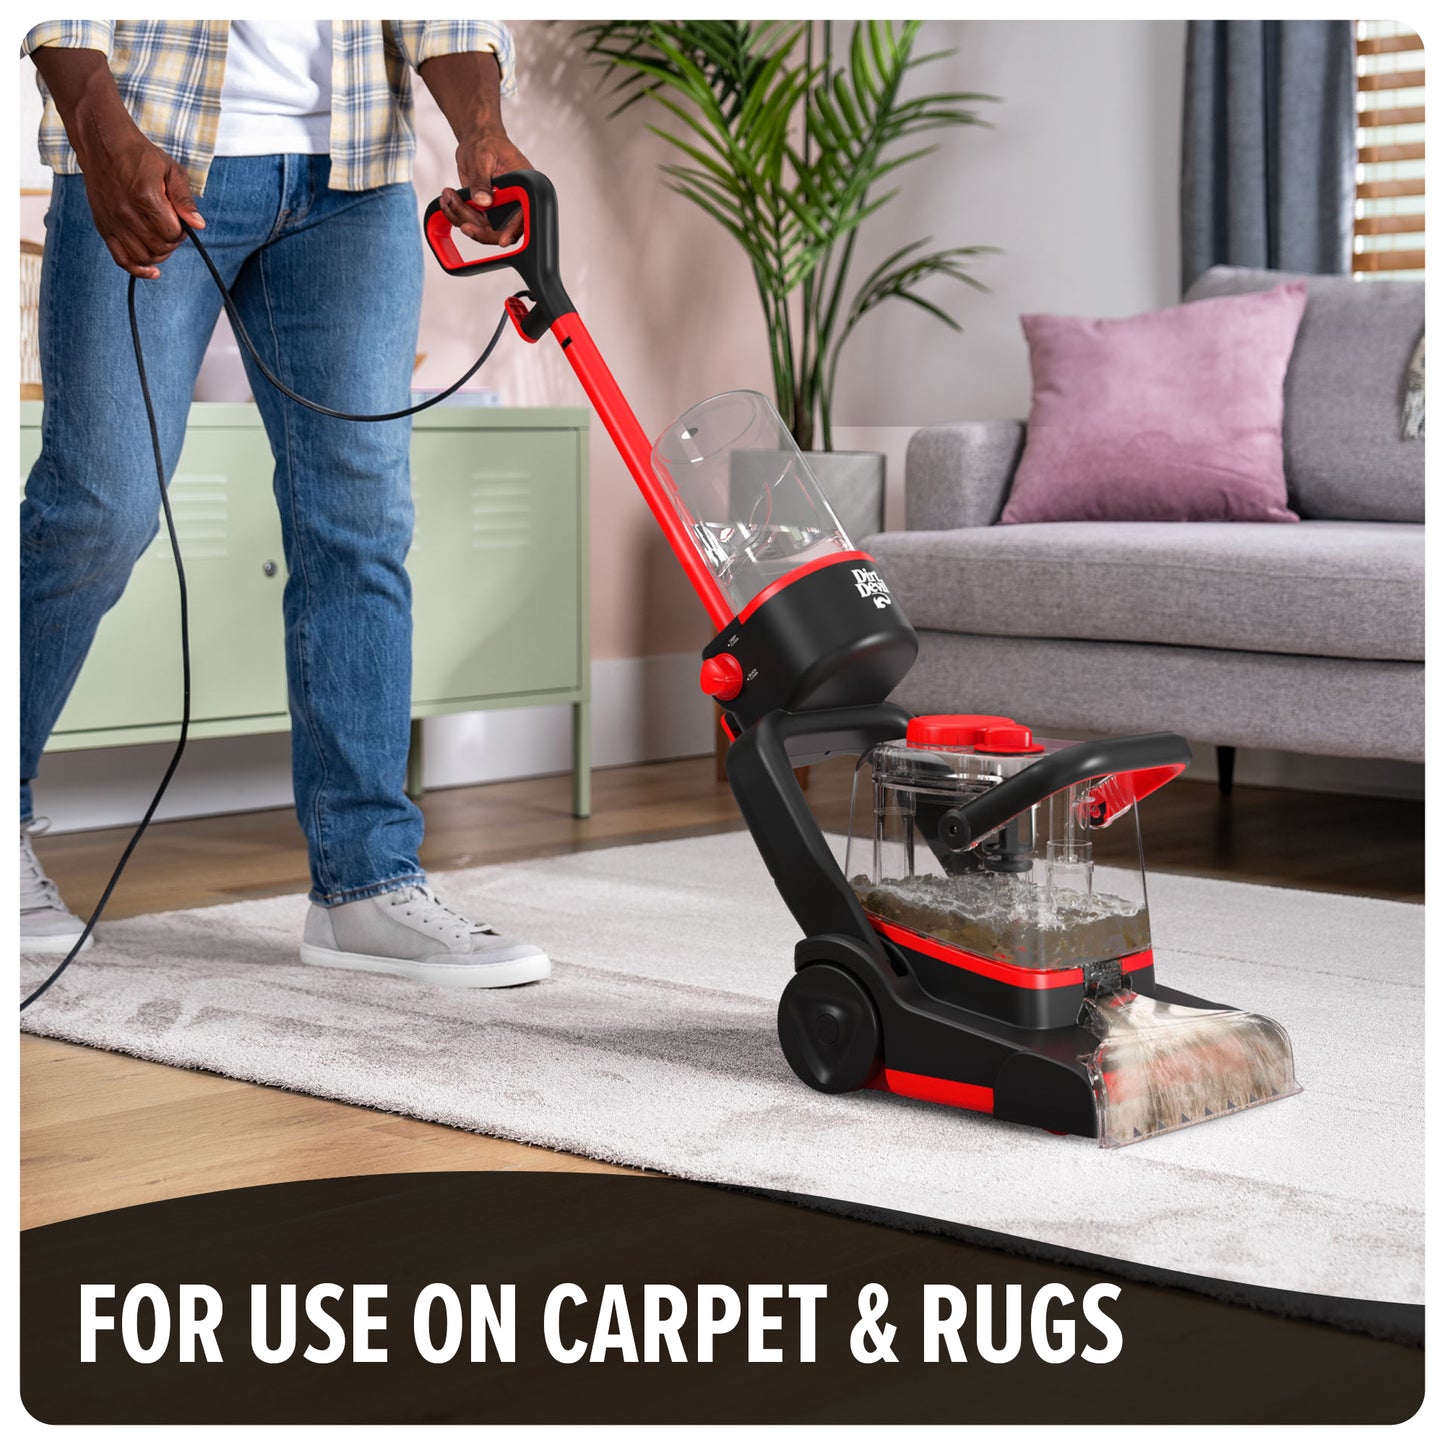 Pet Carpet Cleaner Solution